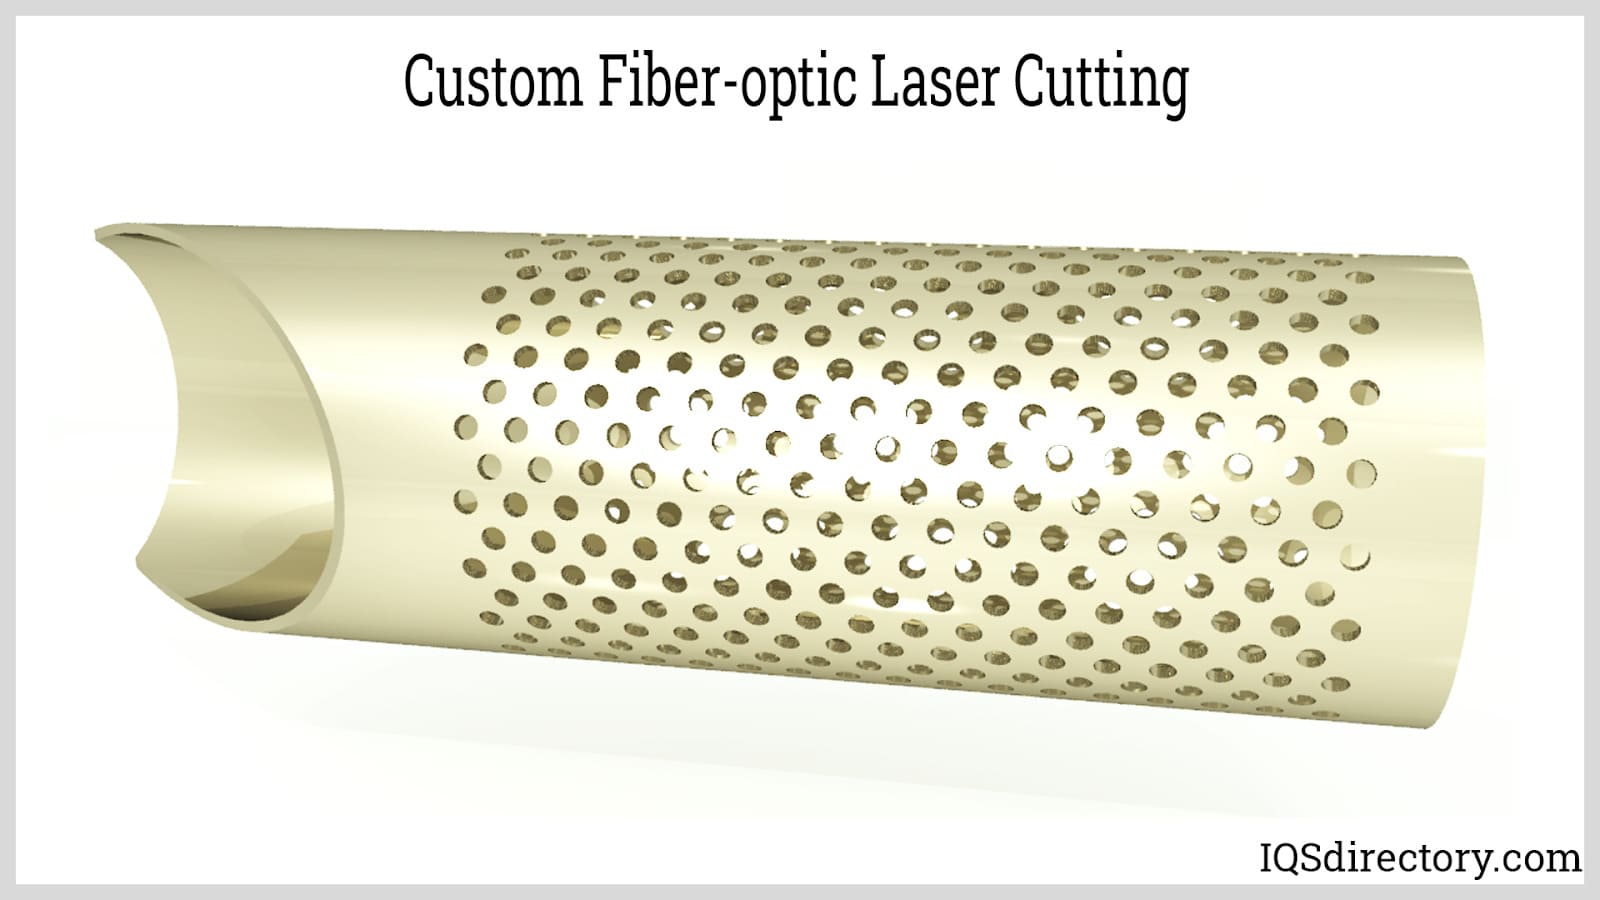 Custom Fiber-optic Laser Cutting